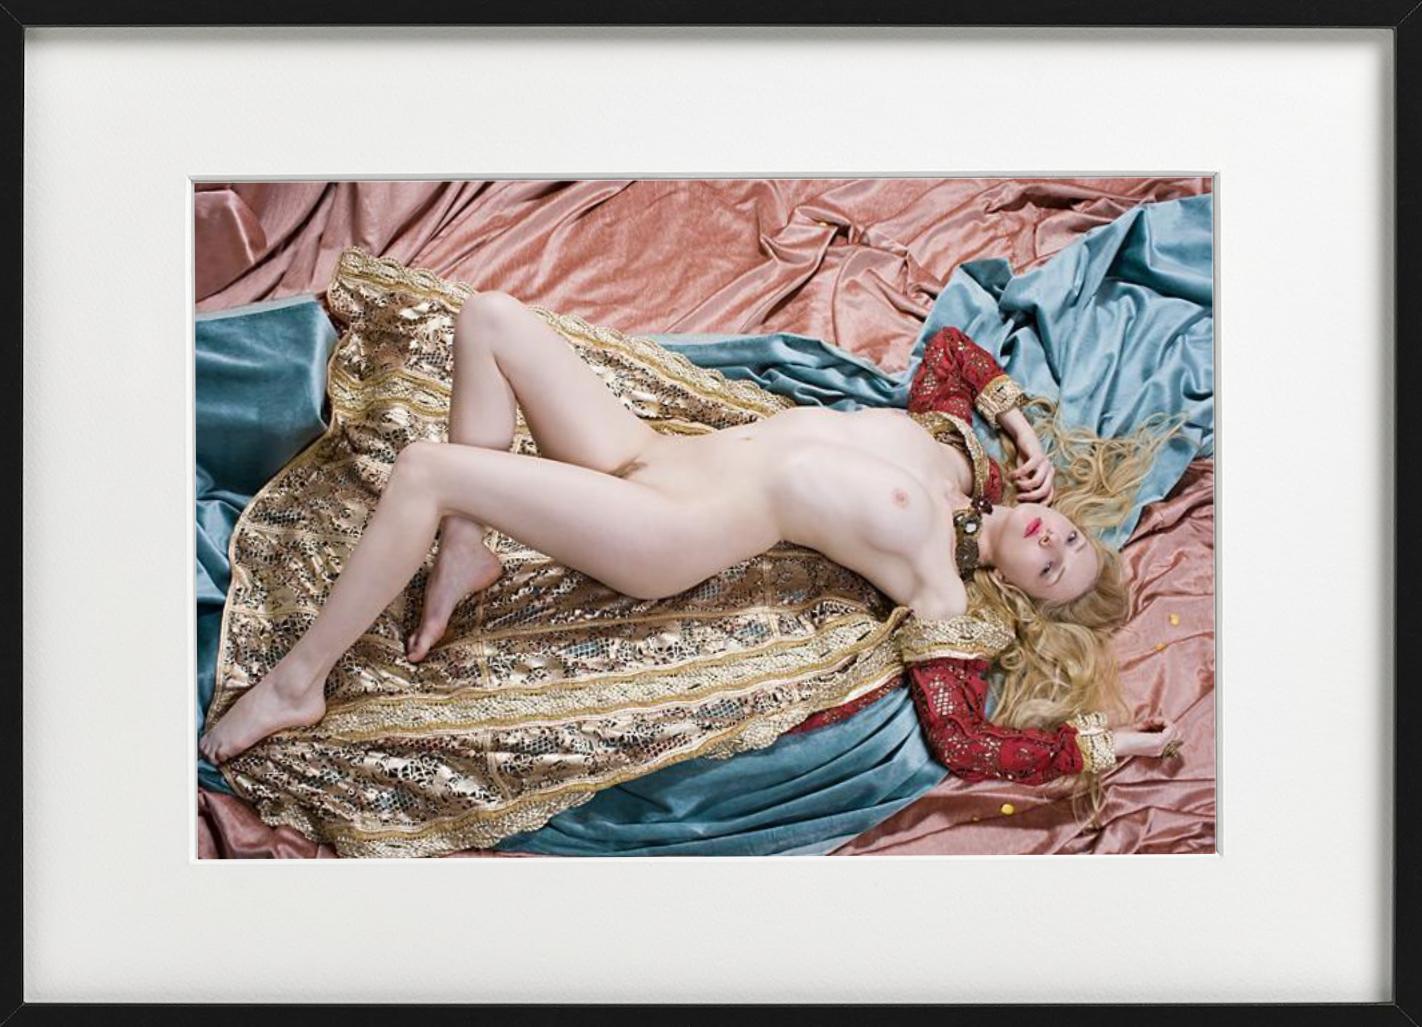 Lying Nude, NYC - nude model between fabrics, fine art photography, 2007 - Photograph by Iris Brosch